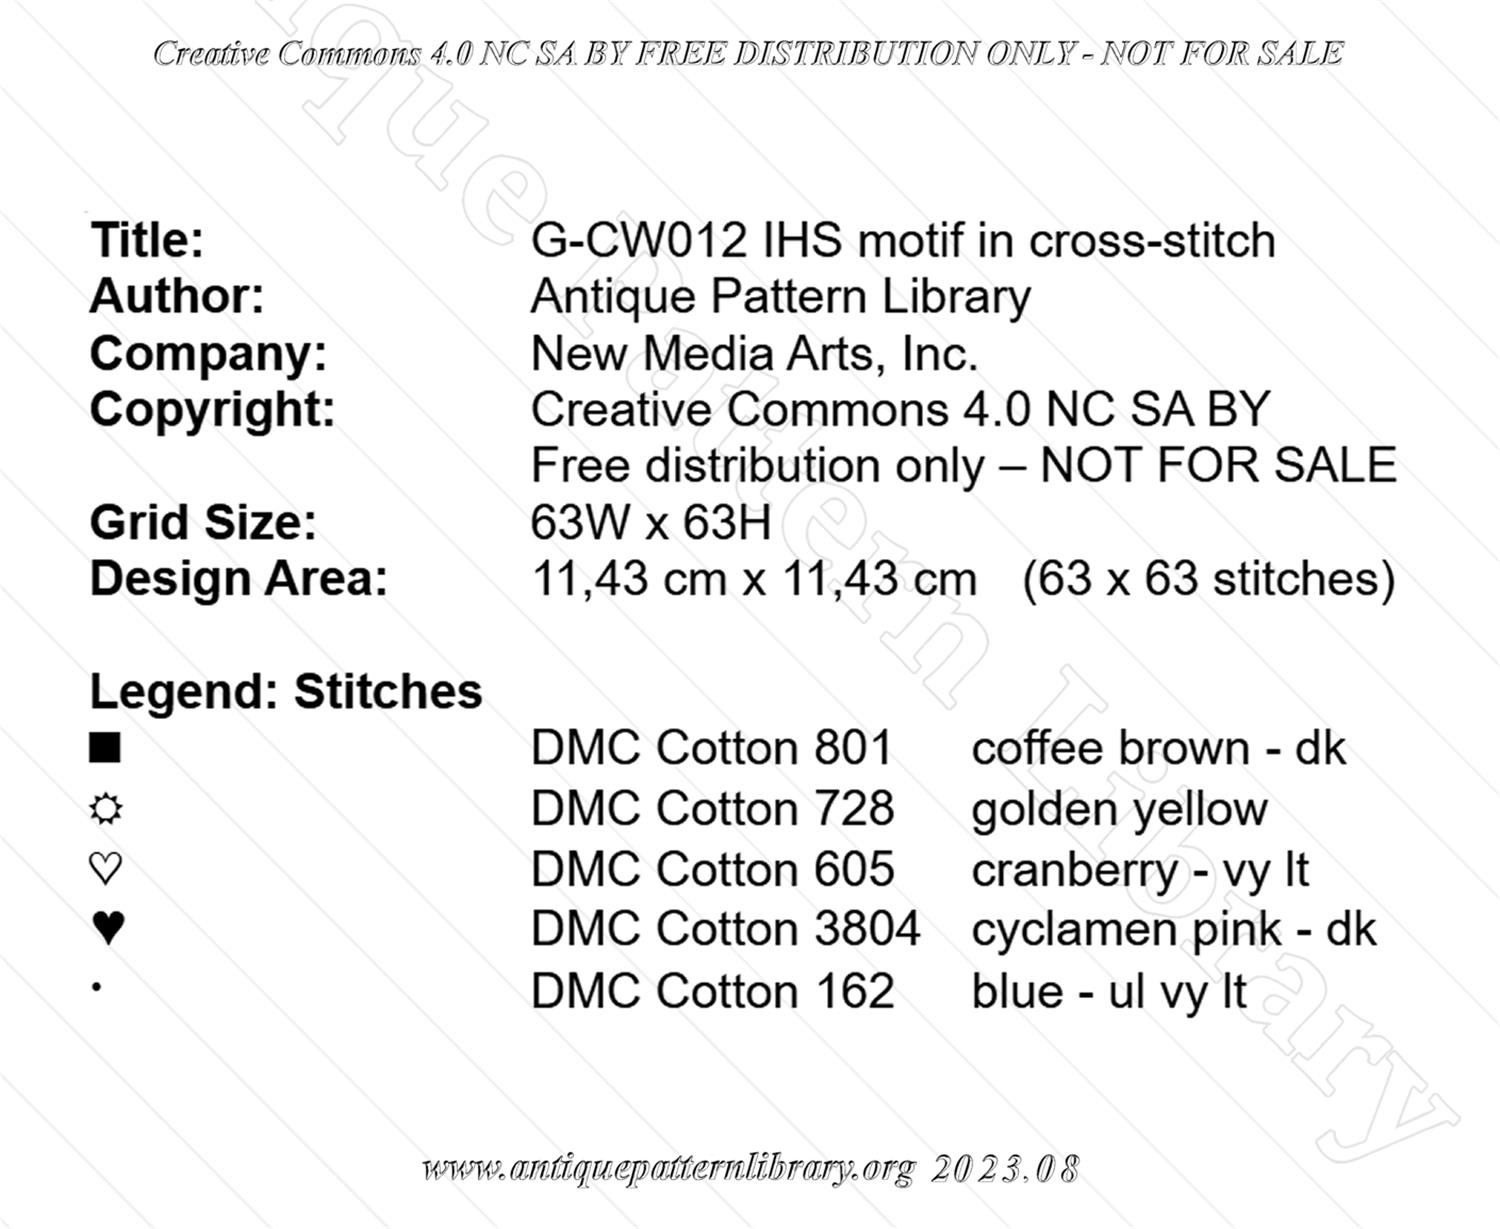 G-CW012 IHS motif in cross-stitch